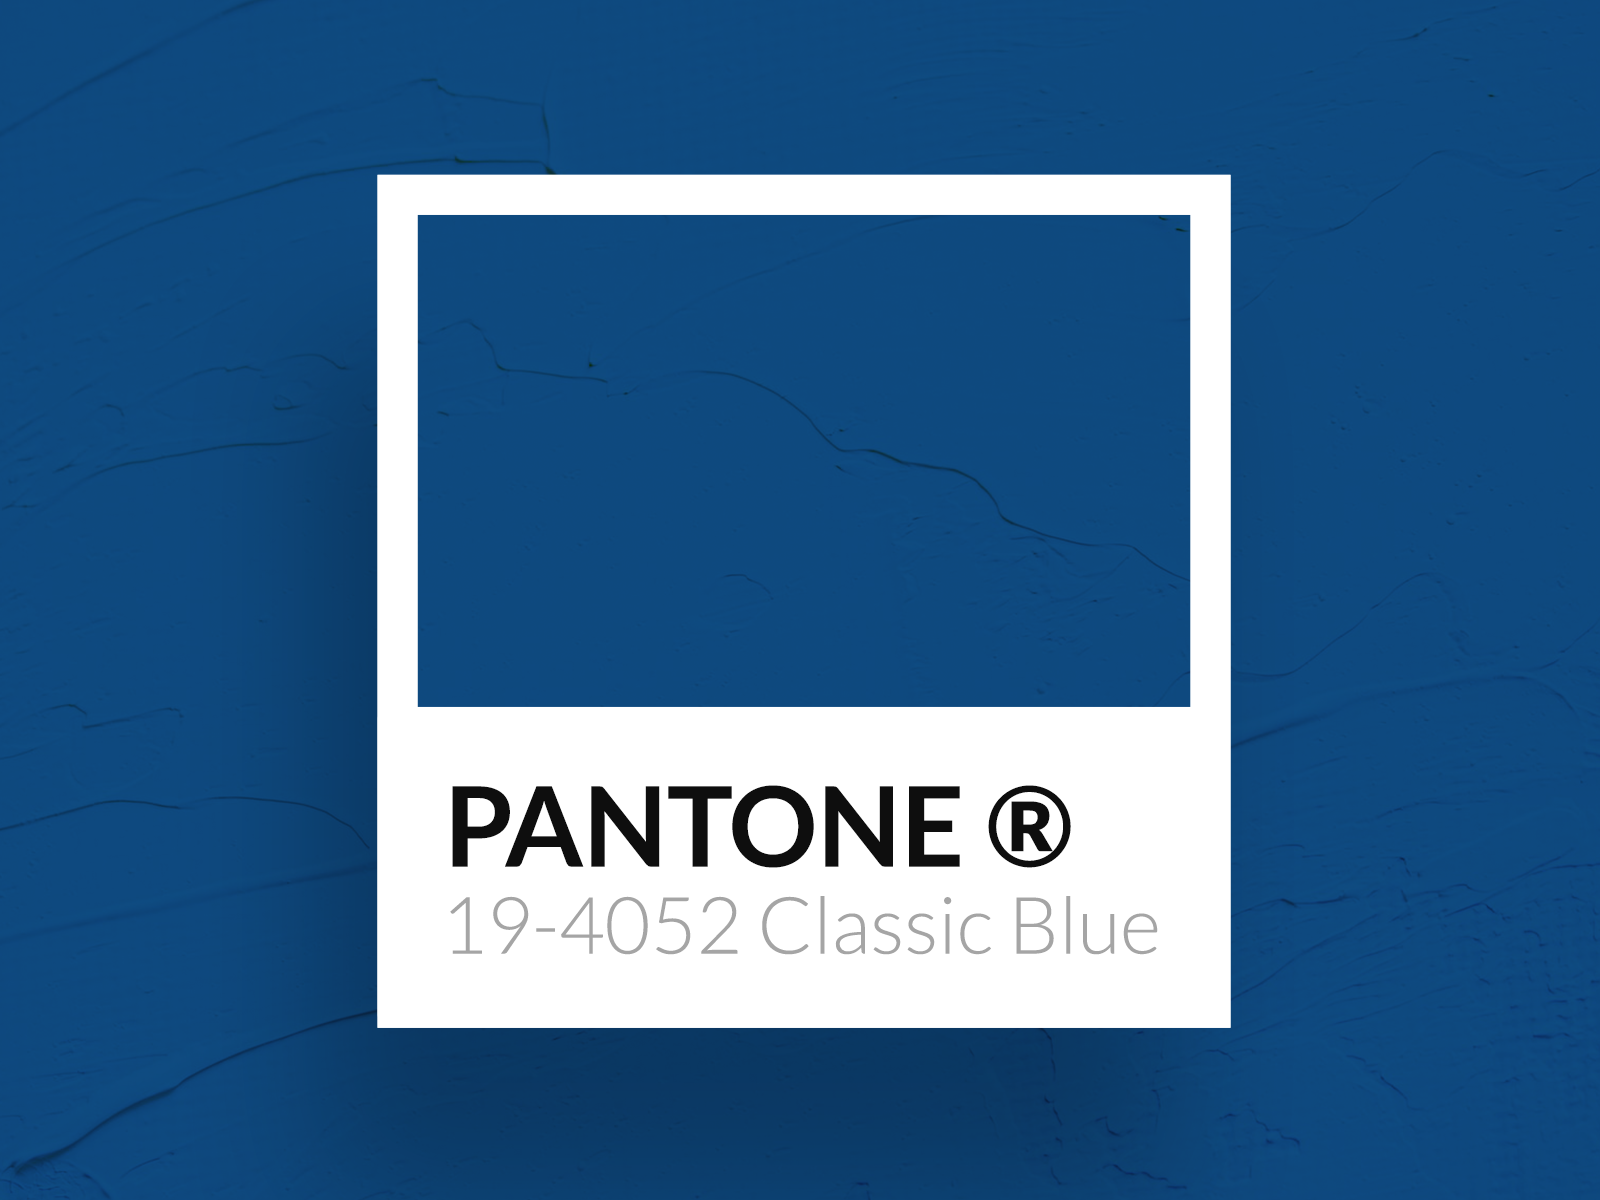 Pantone 2020, 19-4052 Classic Blue by Patrycja Michno on Dribbble